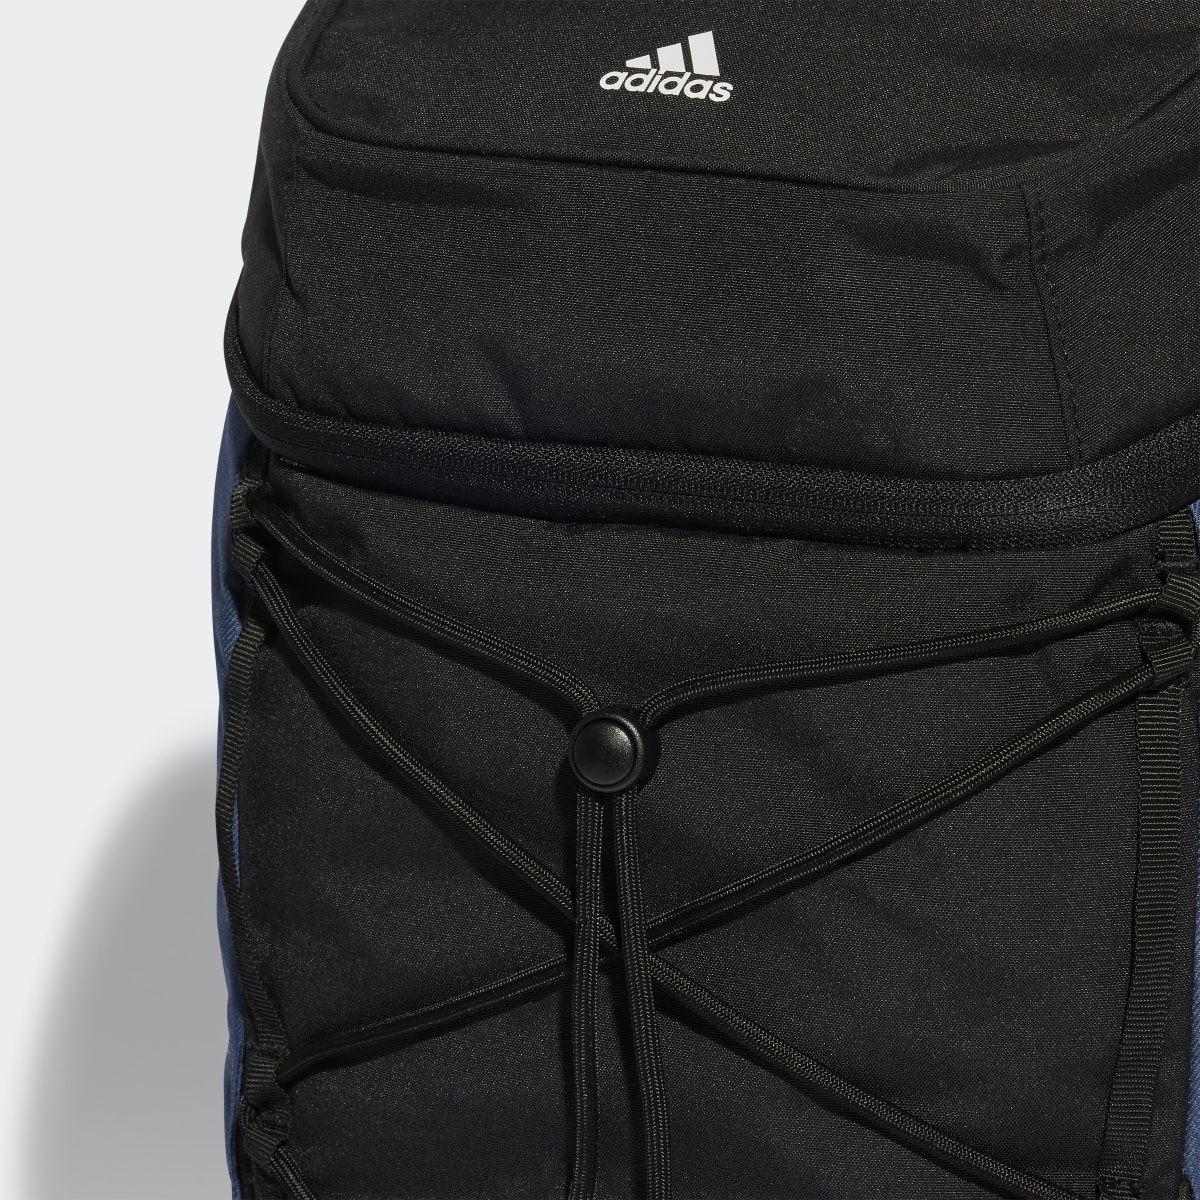 Adidas City Xplorer Backpack. 7